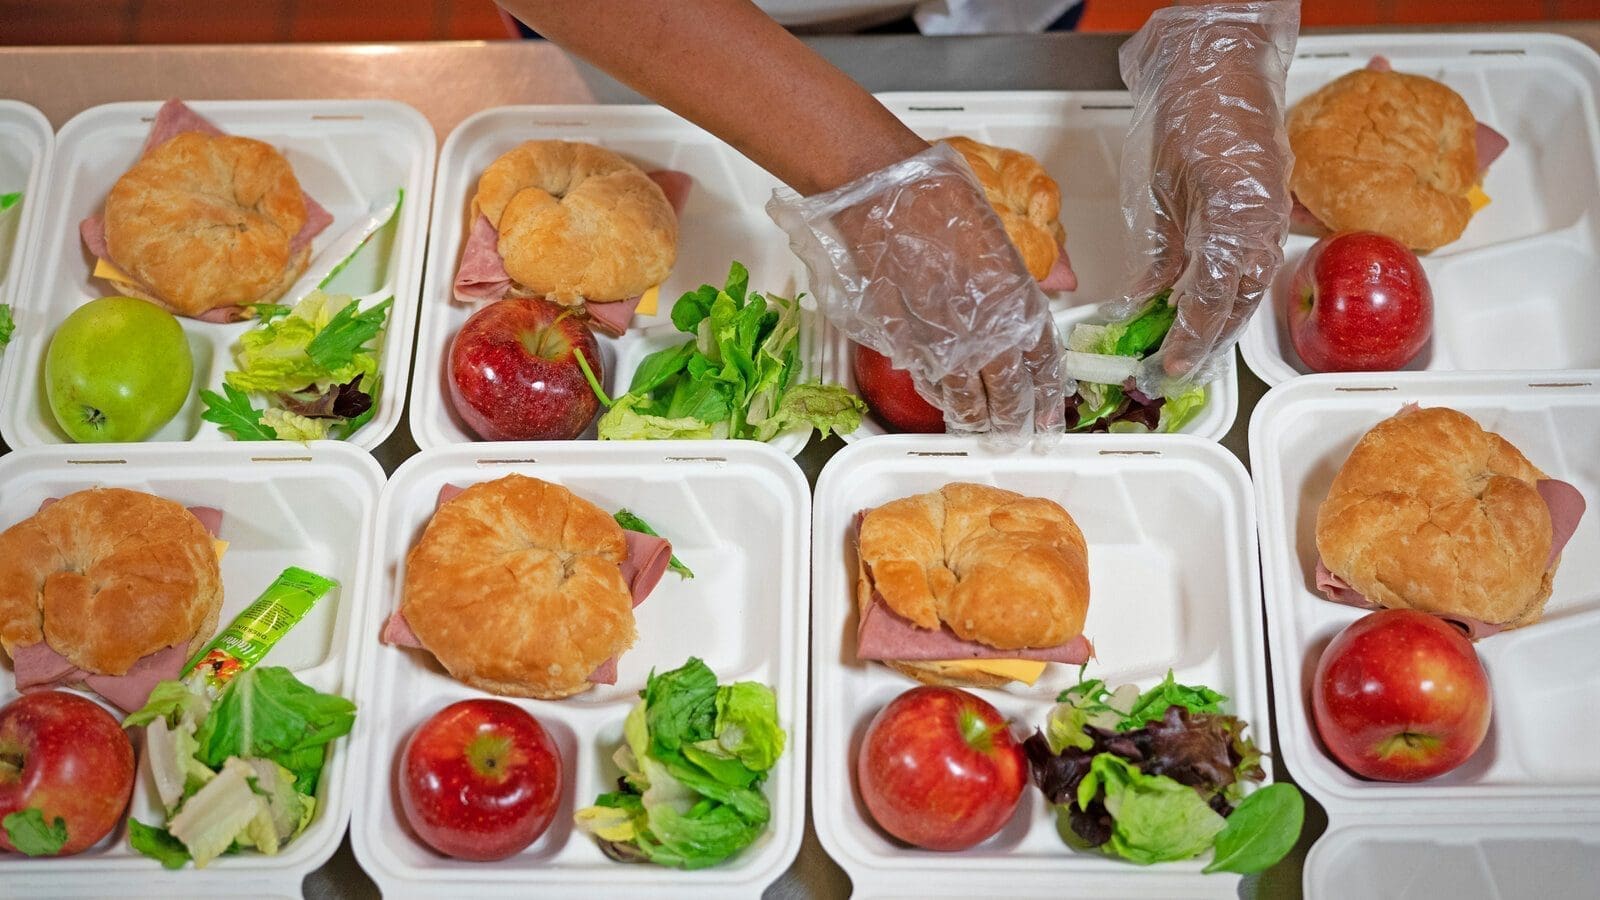 USDA updates school nutrition standards to support meal program